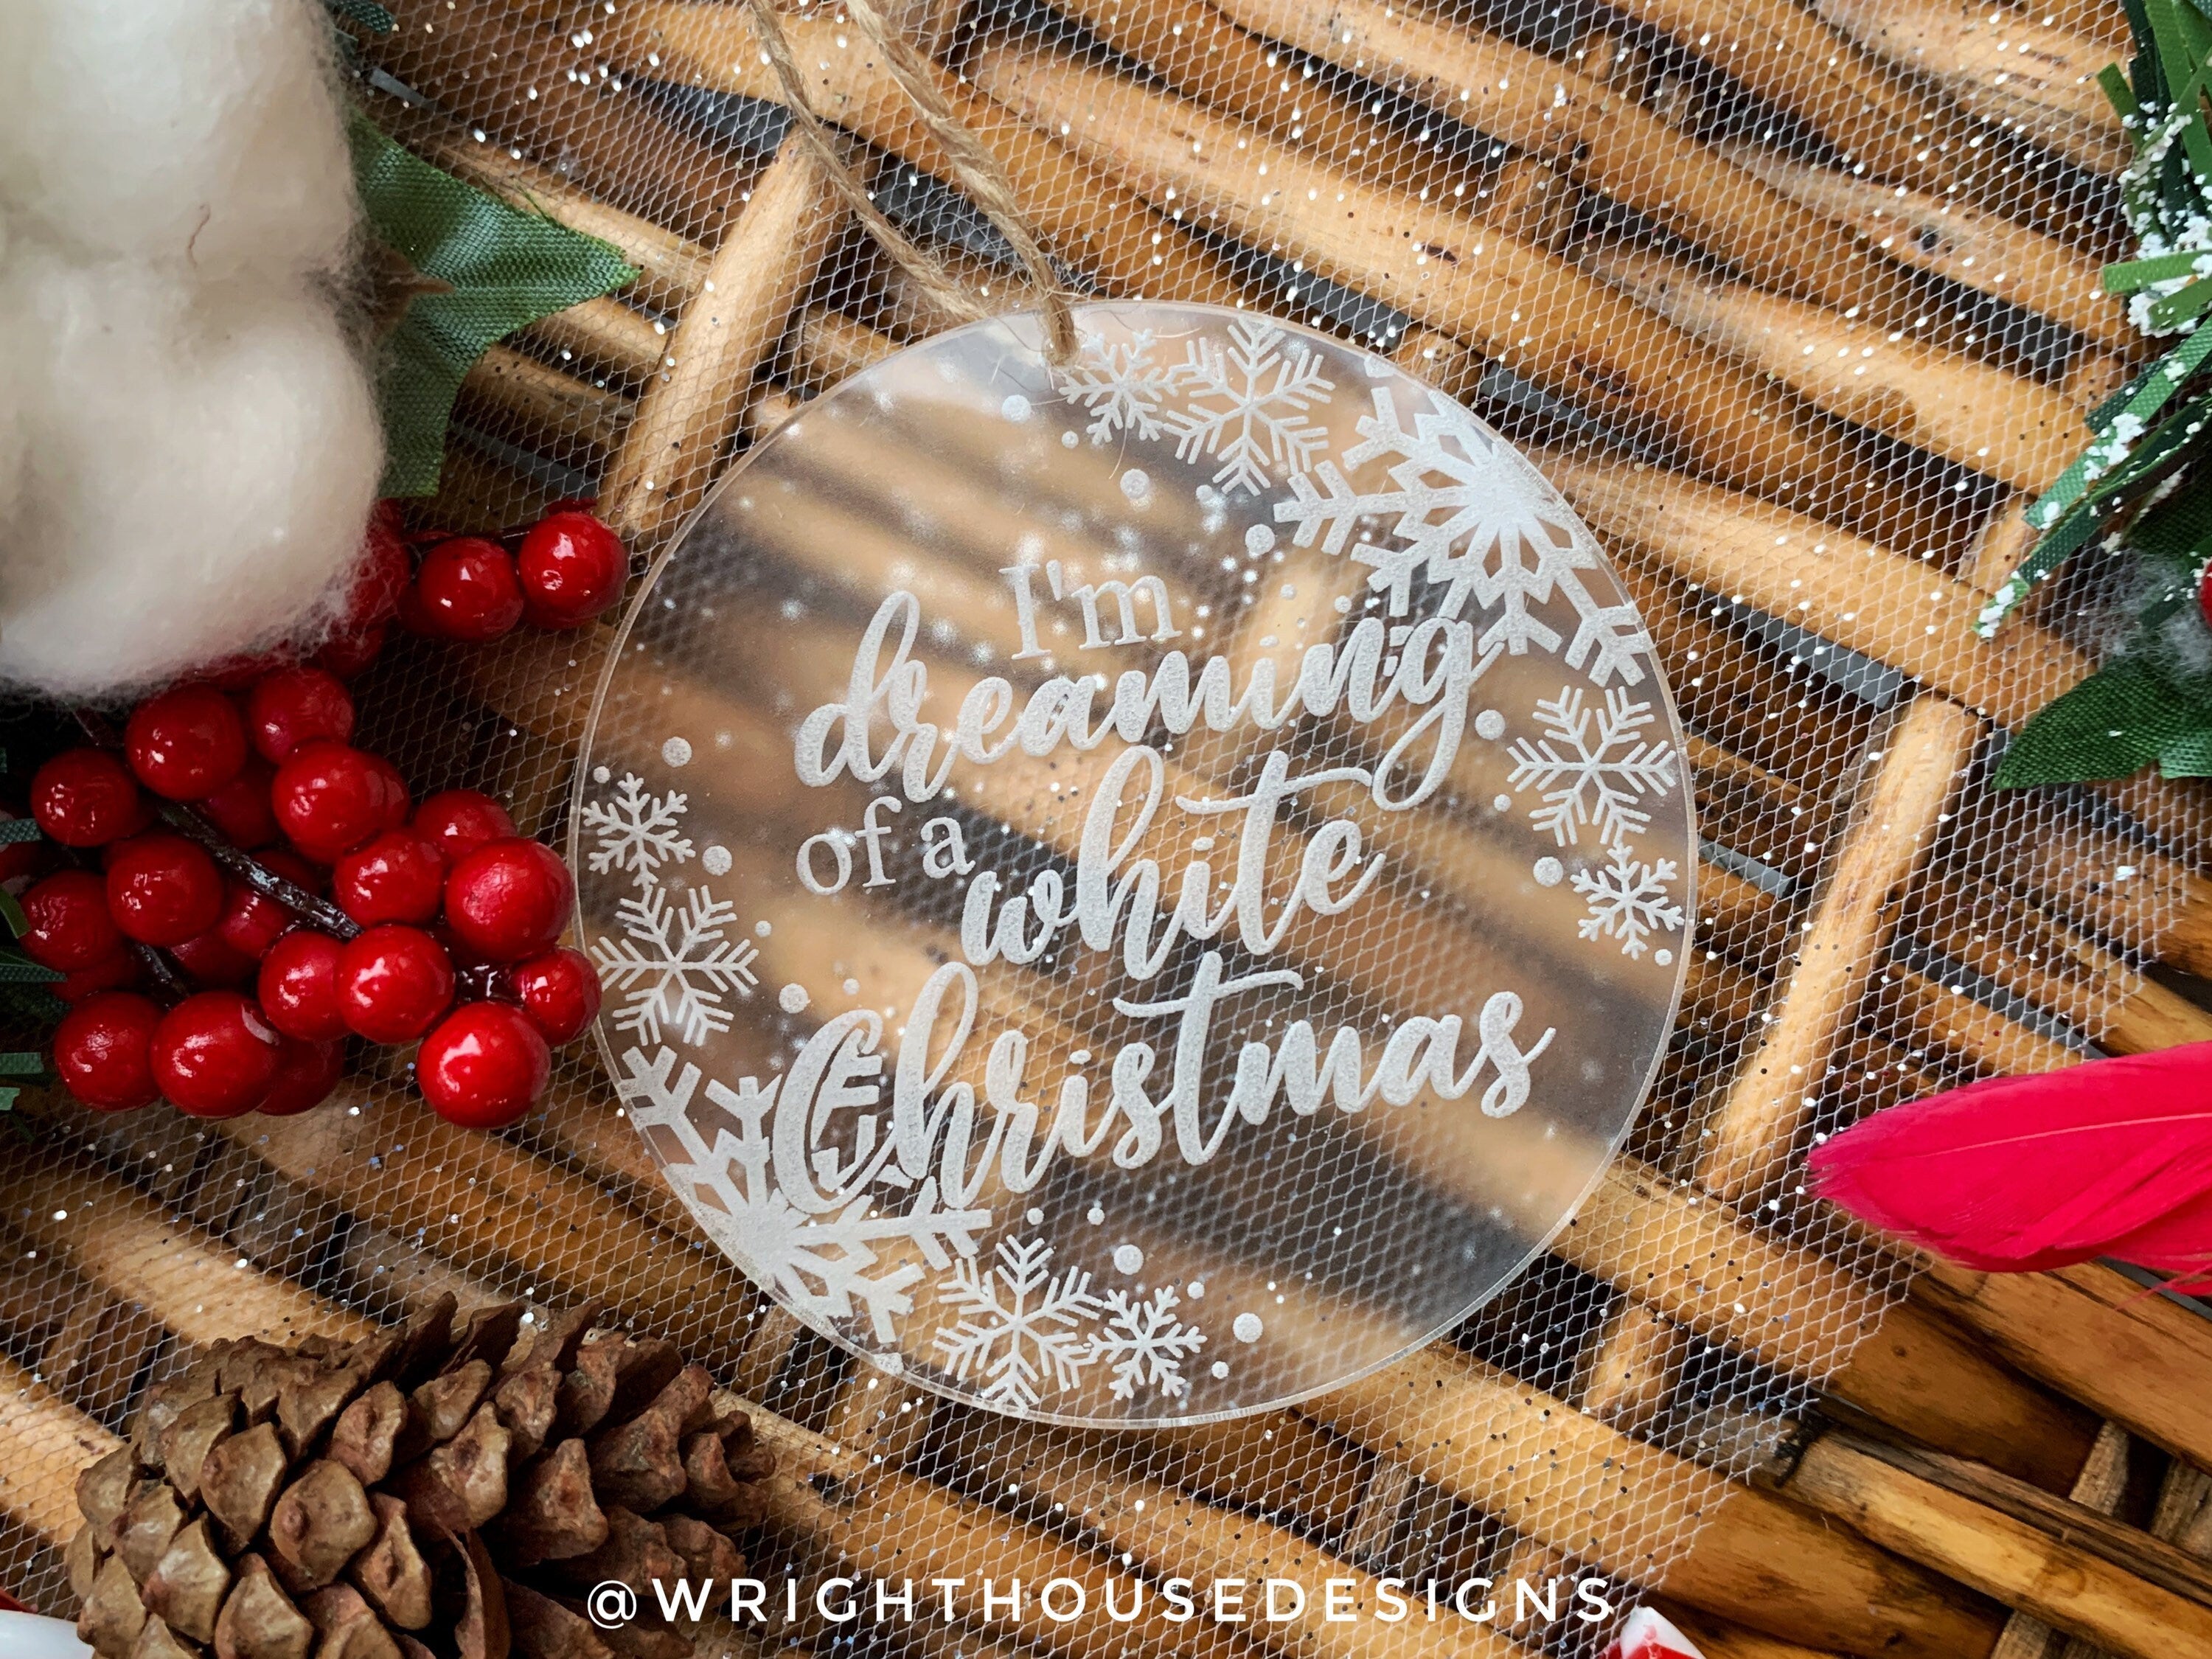 I'm Dreaming of a White Christmas -Engraved Acrylic - Christmas Tree Ornament